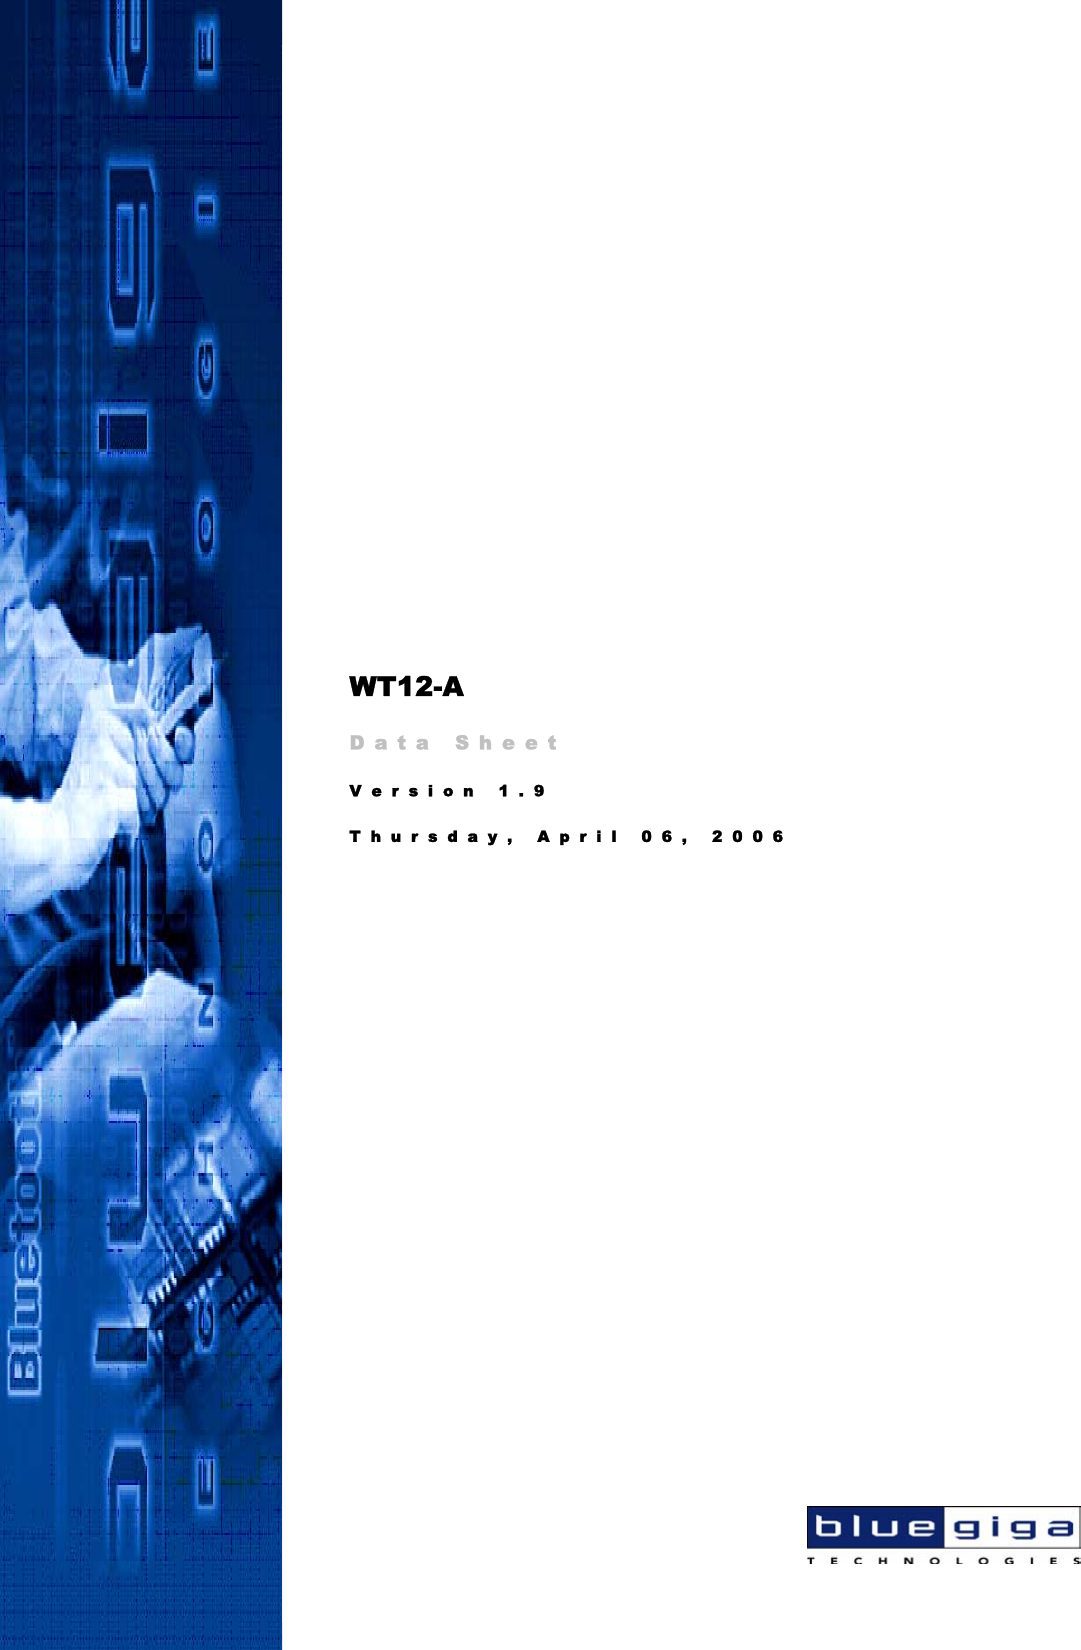 WT12-A Data Sheet Version 1.9 Thursday, April 06, 2006  